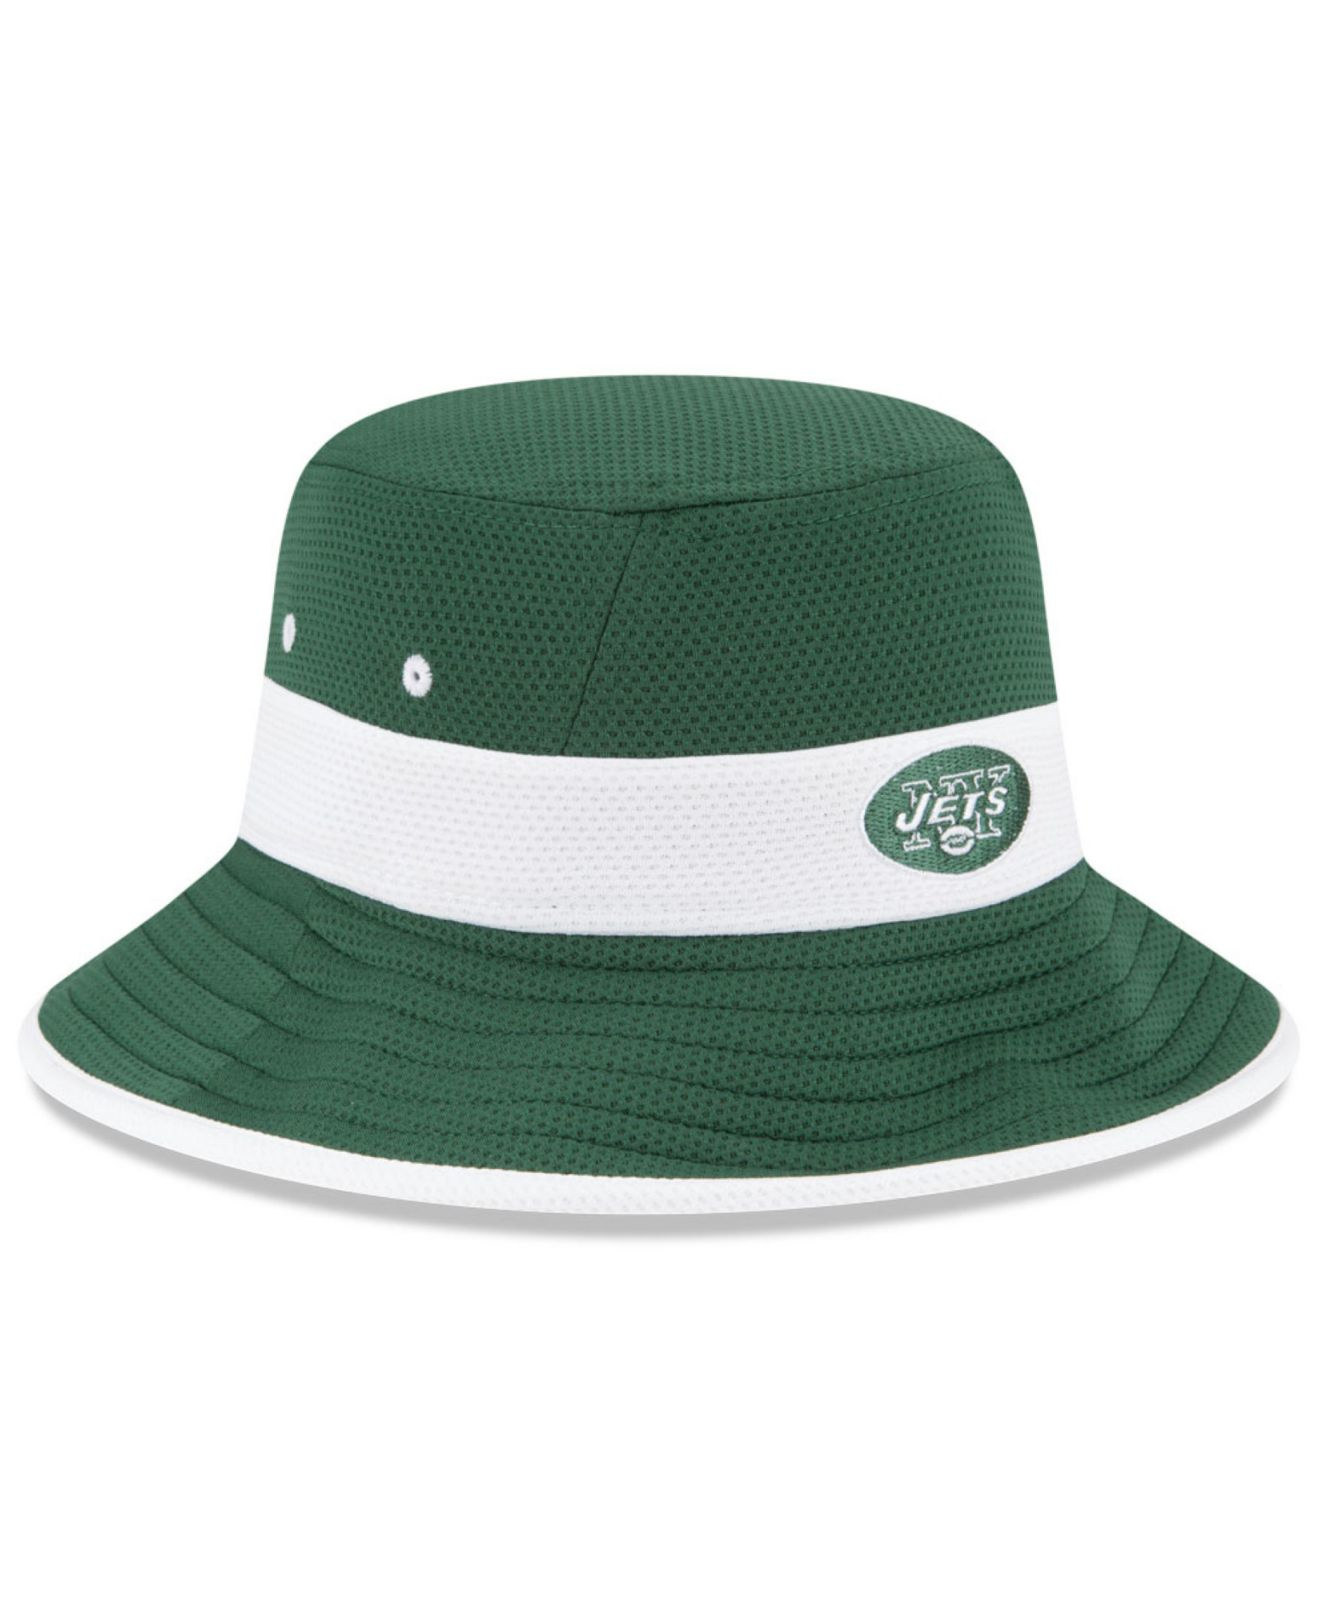 Lyst - Ktz New York Jets Training Camp Reverse Bucket Hat in Green for Men